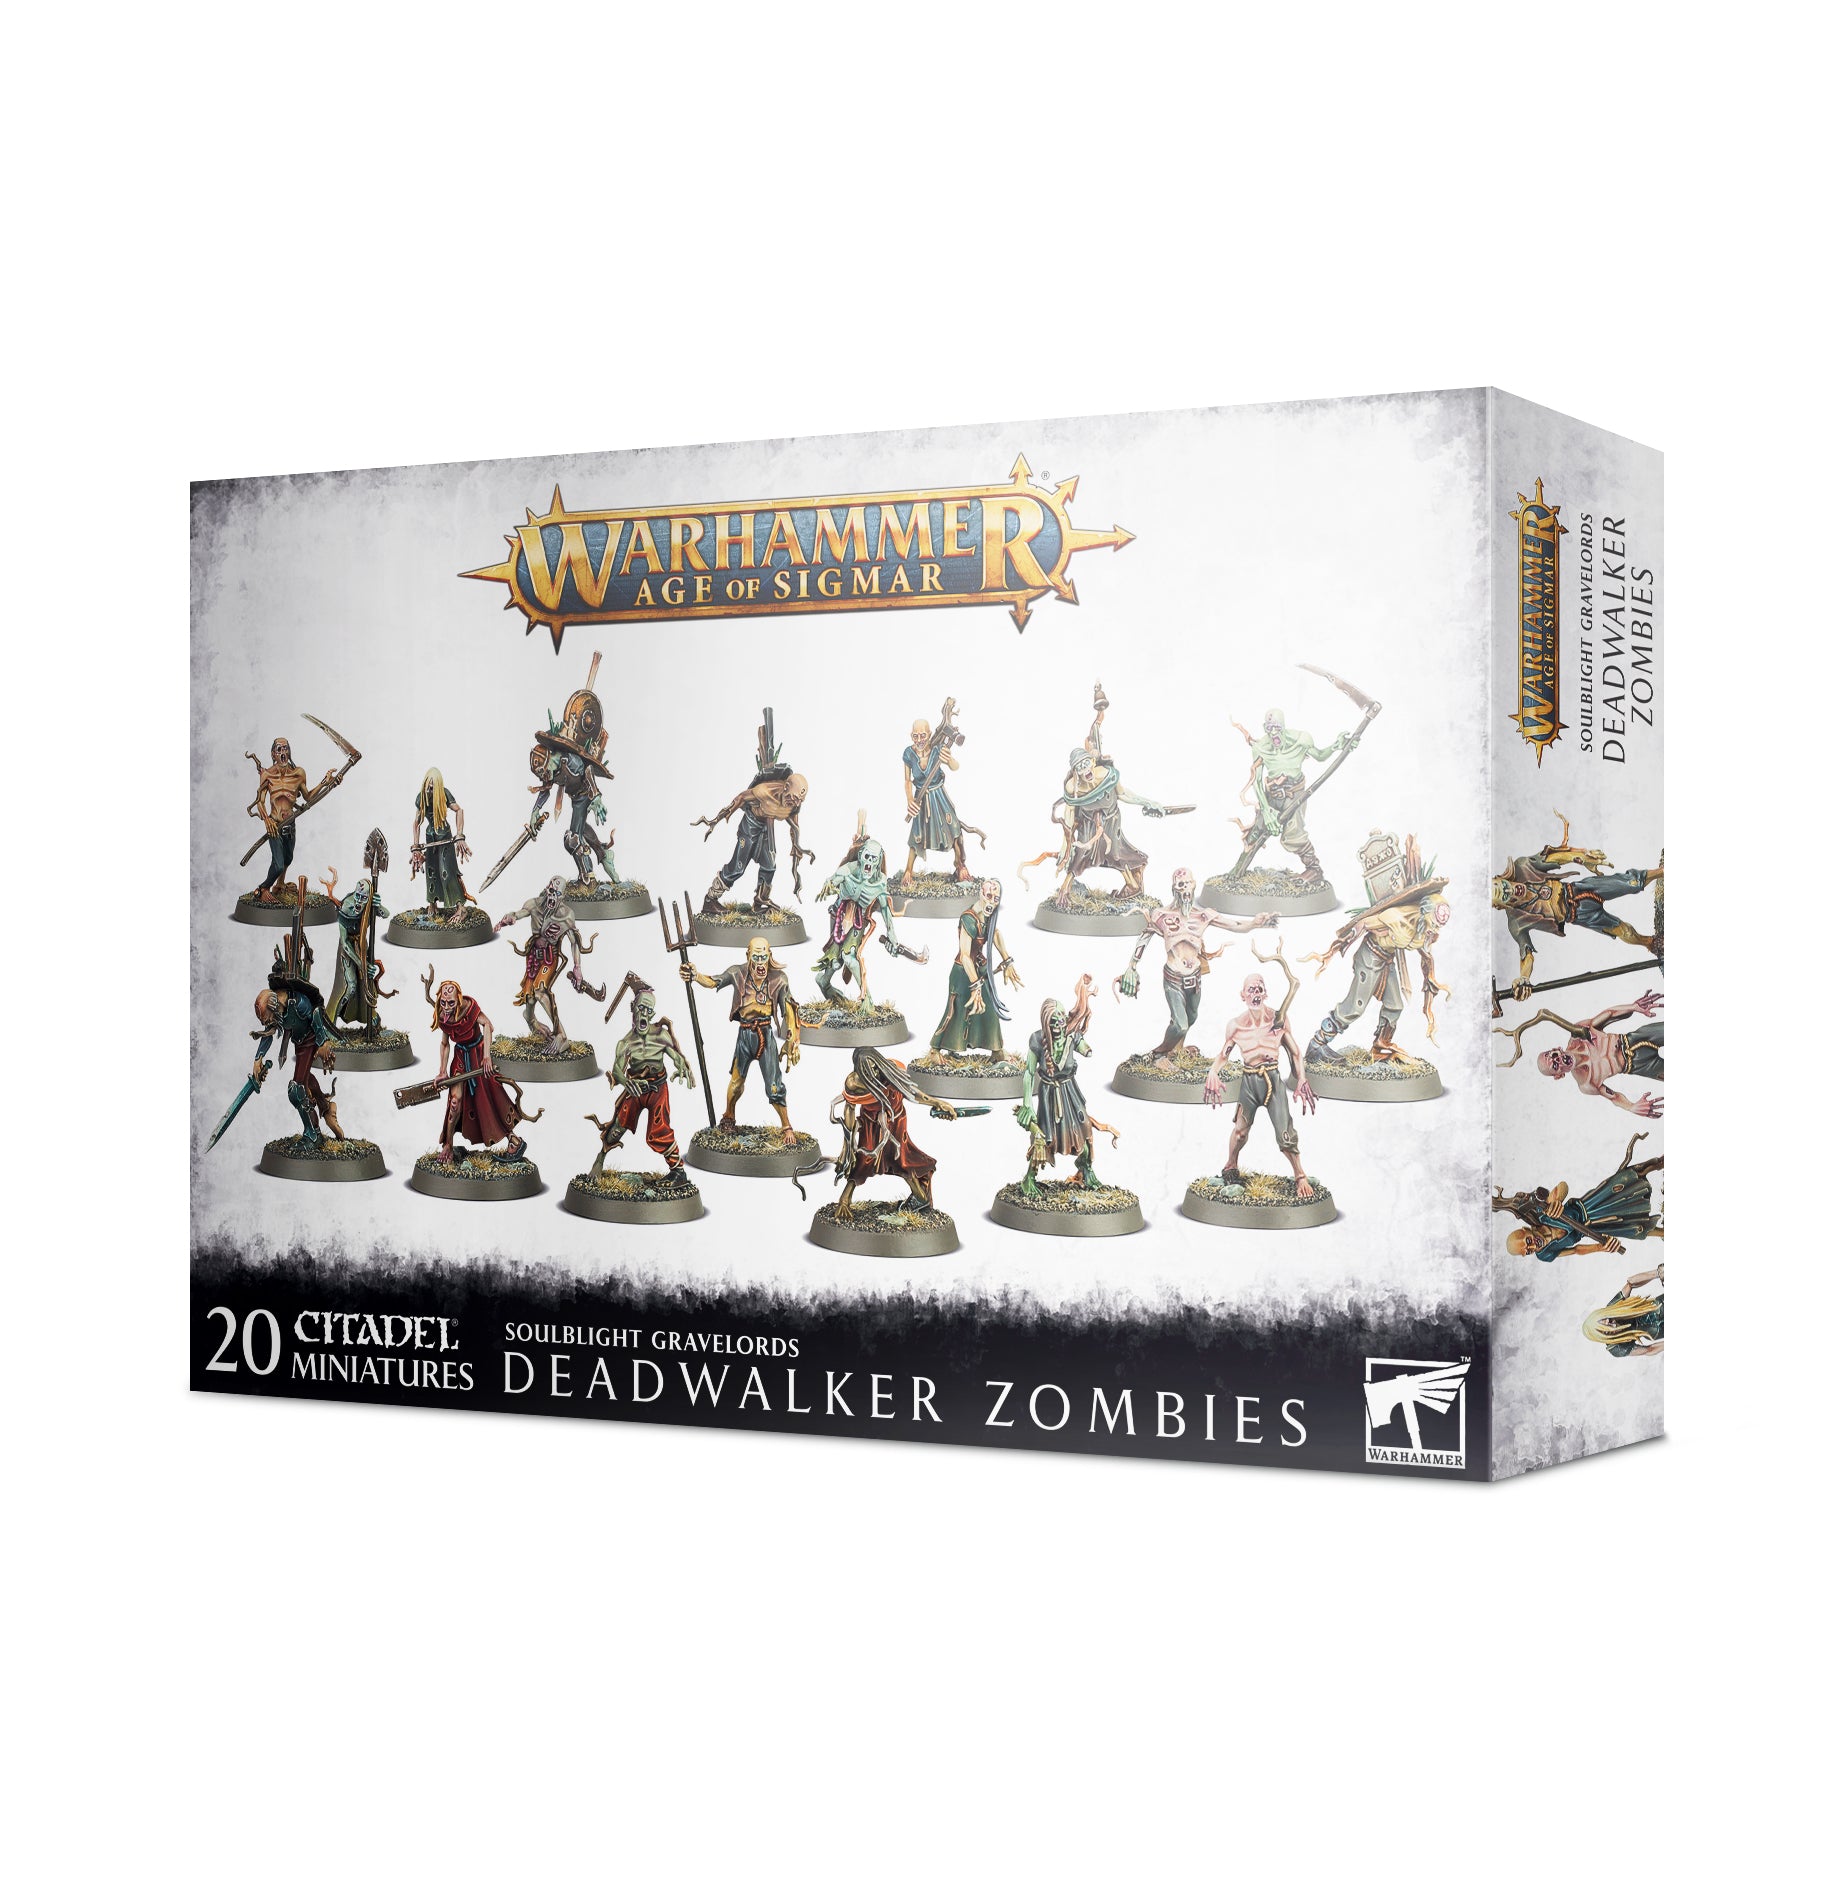 Soulblight Gravelords Deadwalker Zombies